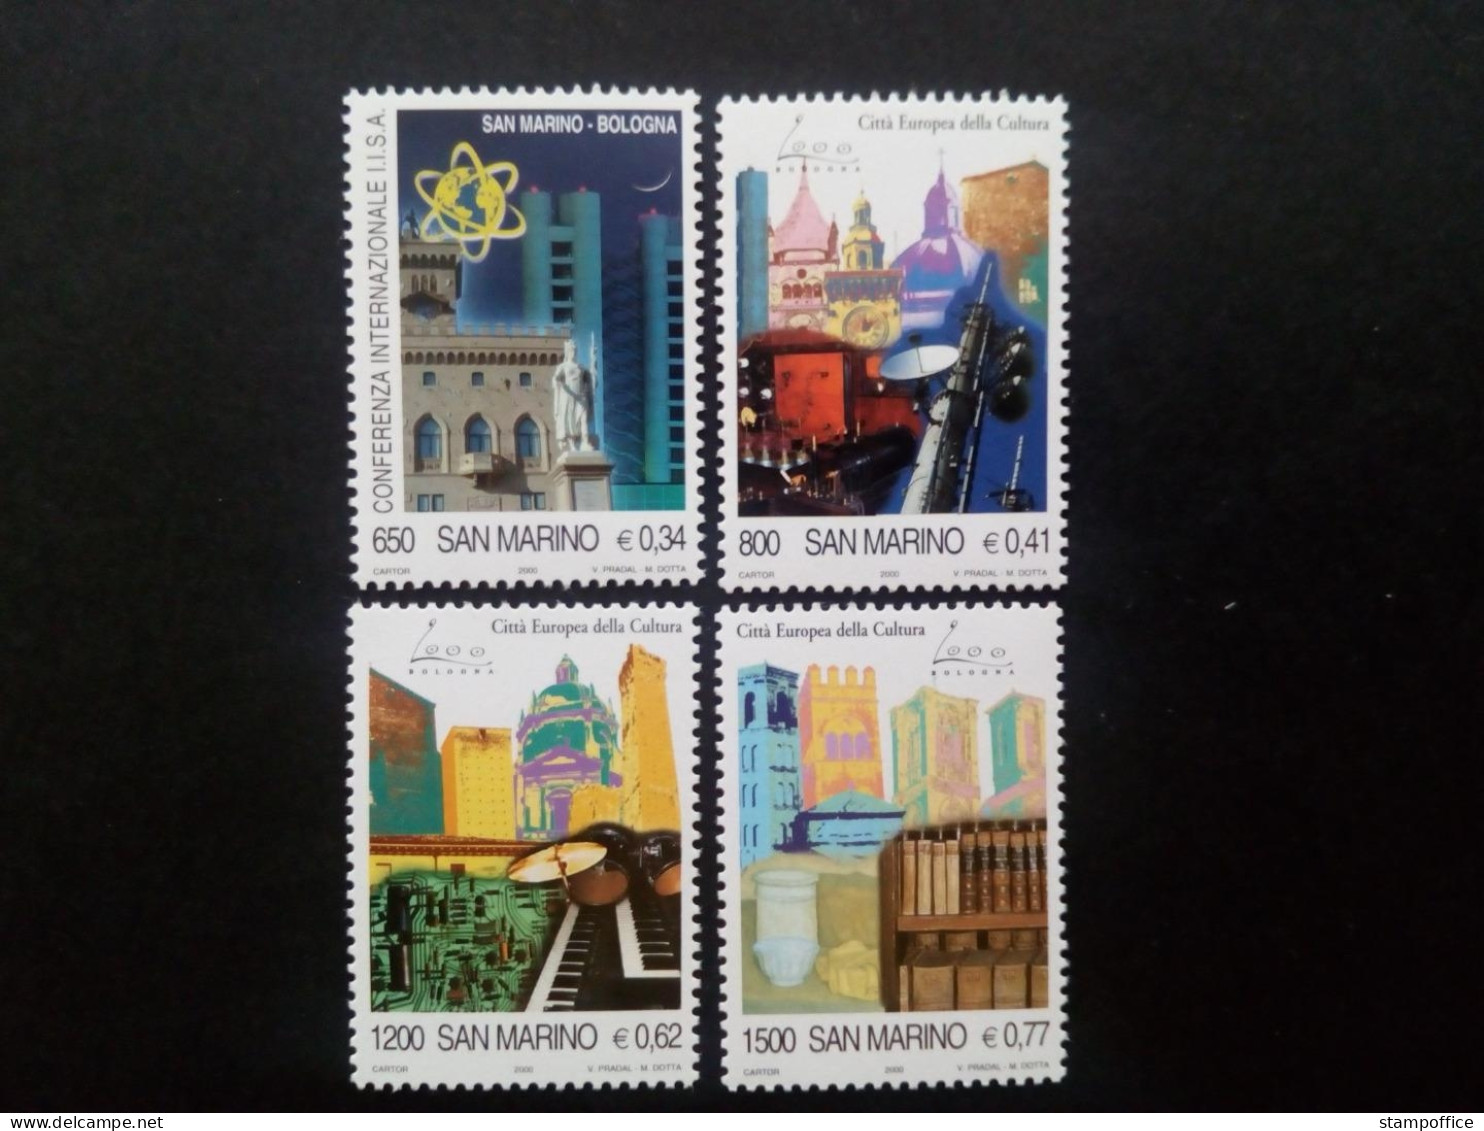 SAN MARINO MI-NR. 1886-1889 POSTFRISCH(MINT) BOLOGNA KULTURSTADT EUROPAS 2000 - Unused Stamps